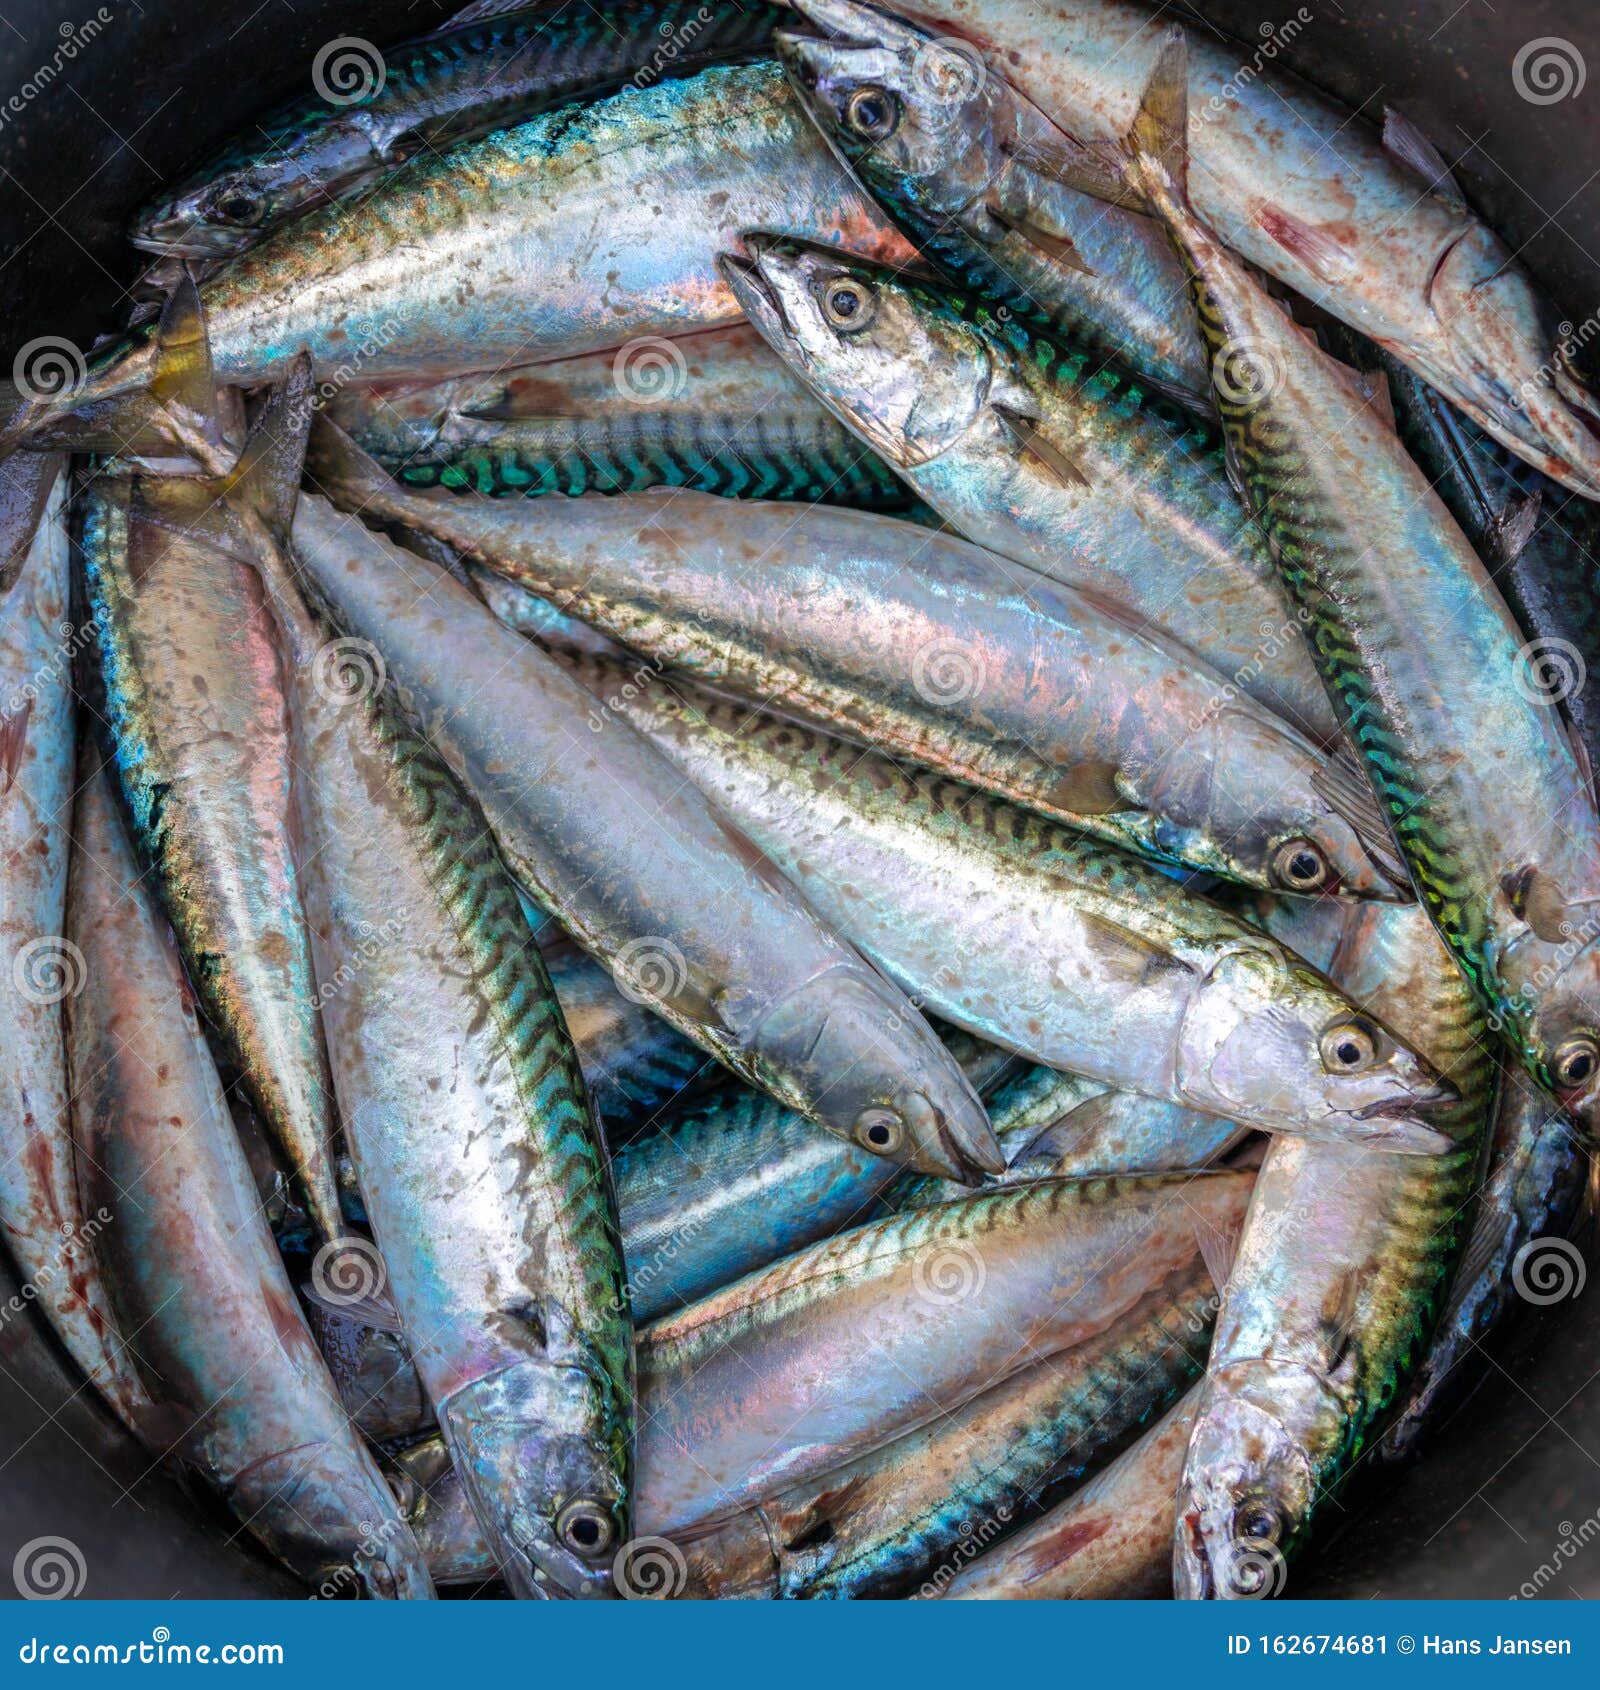 Mackarel Fish in the Bucket Stock Image - Image of fishing, bucket